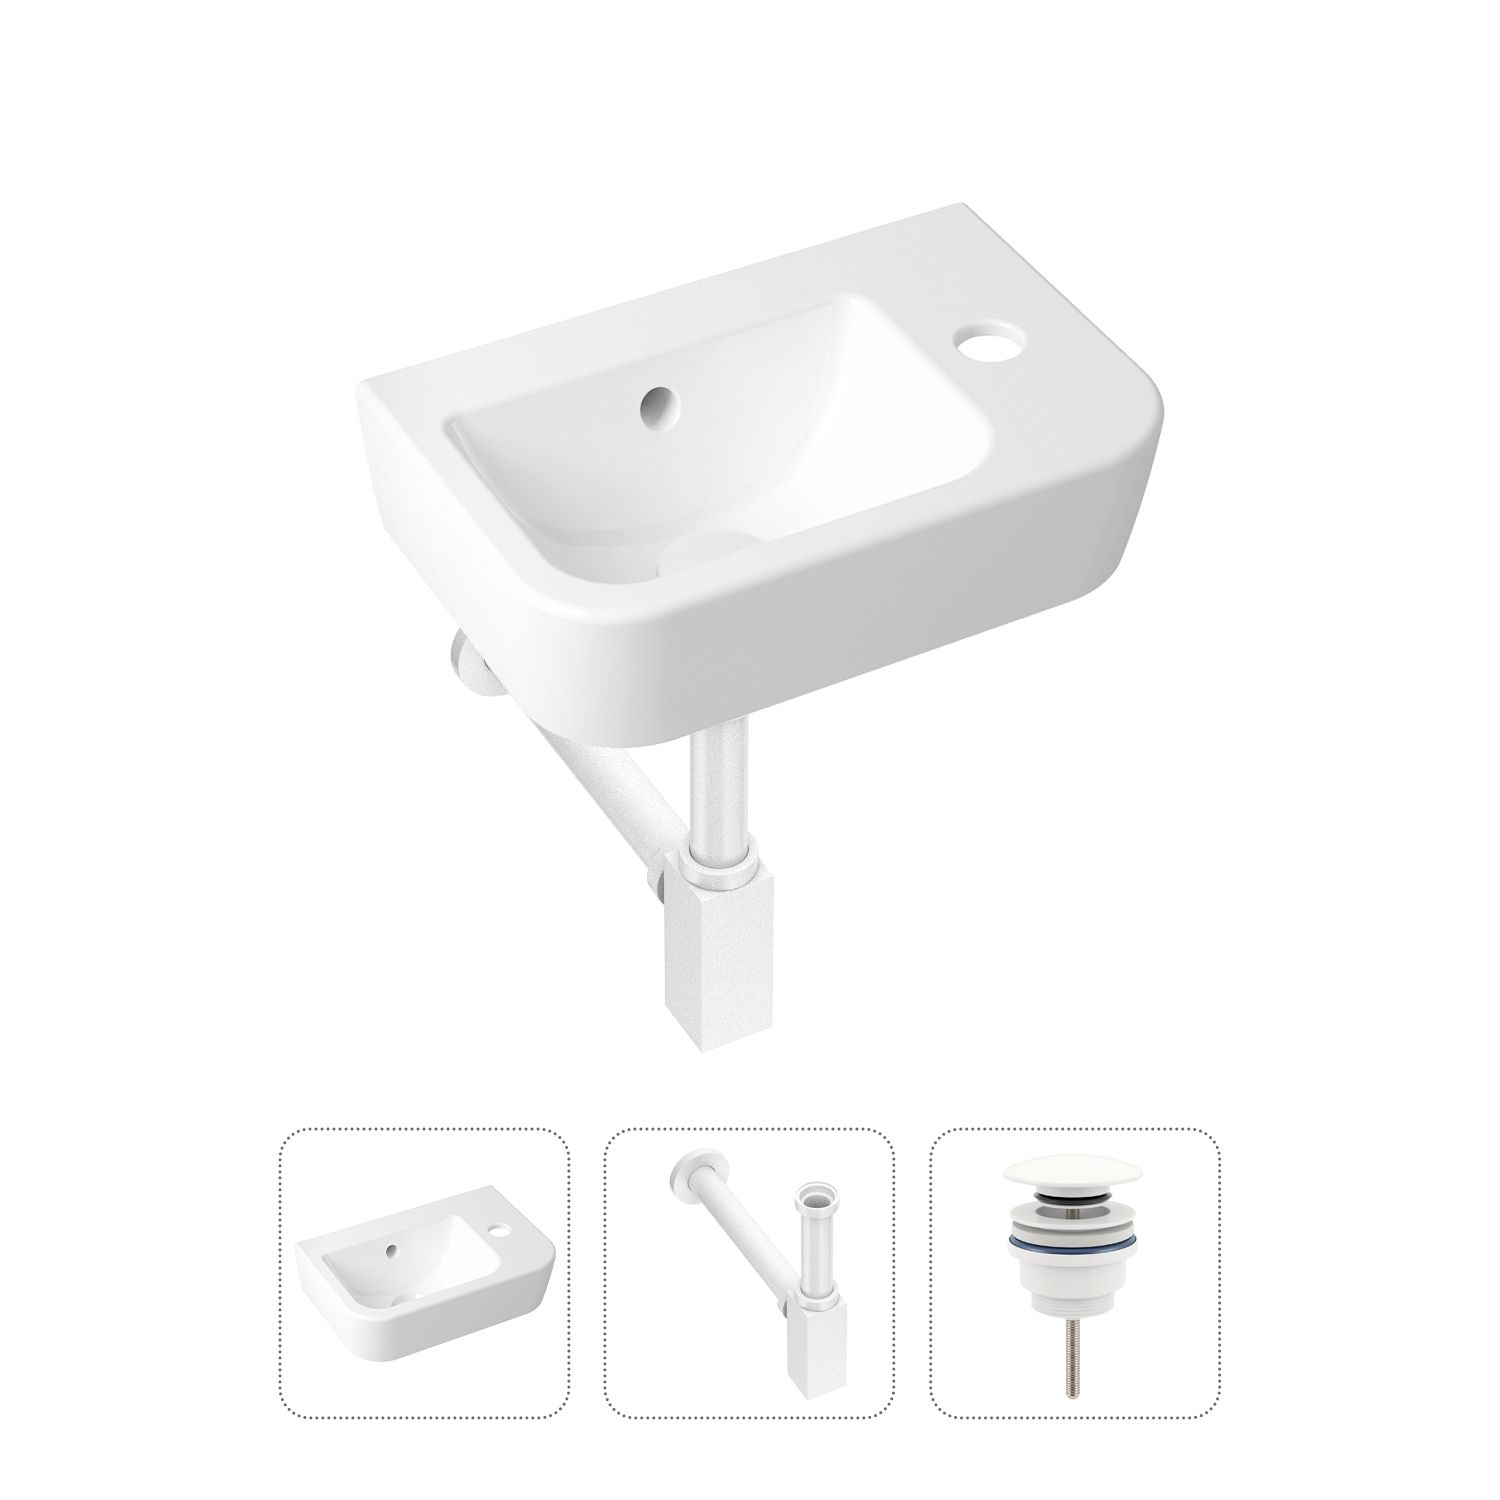 Комплект 3 в 1 Lavinia Boho One 21520767: раковина для туалета 37 см, сифон, донный клапан